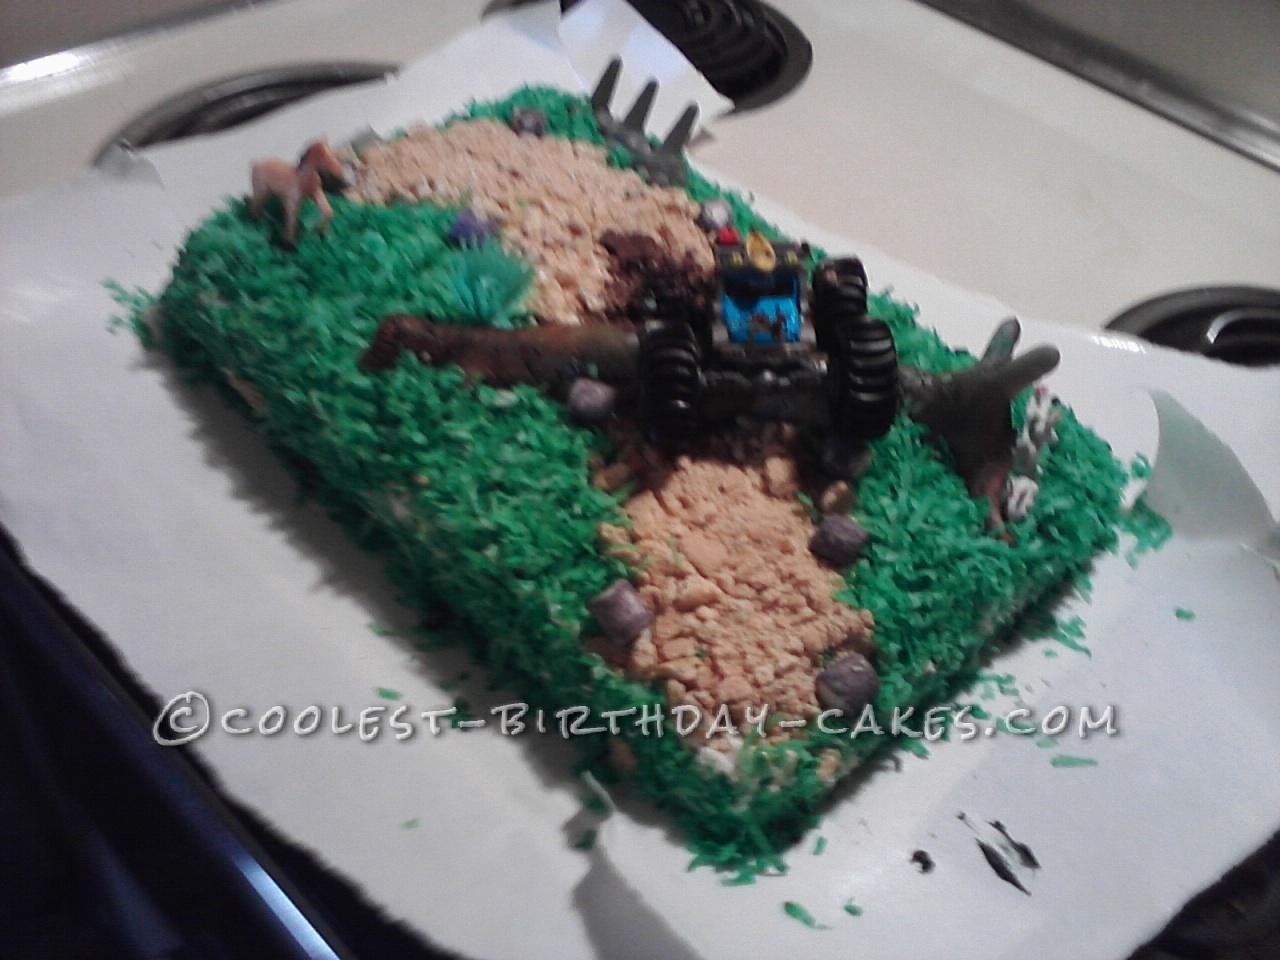 Cool Monster Truck Birthday Cake Idea